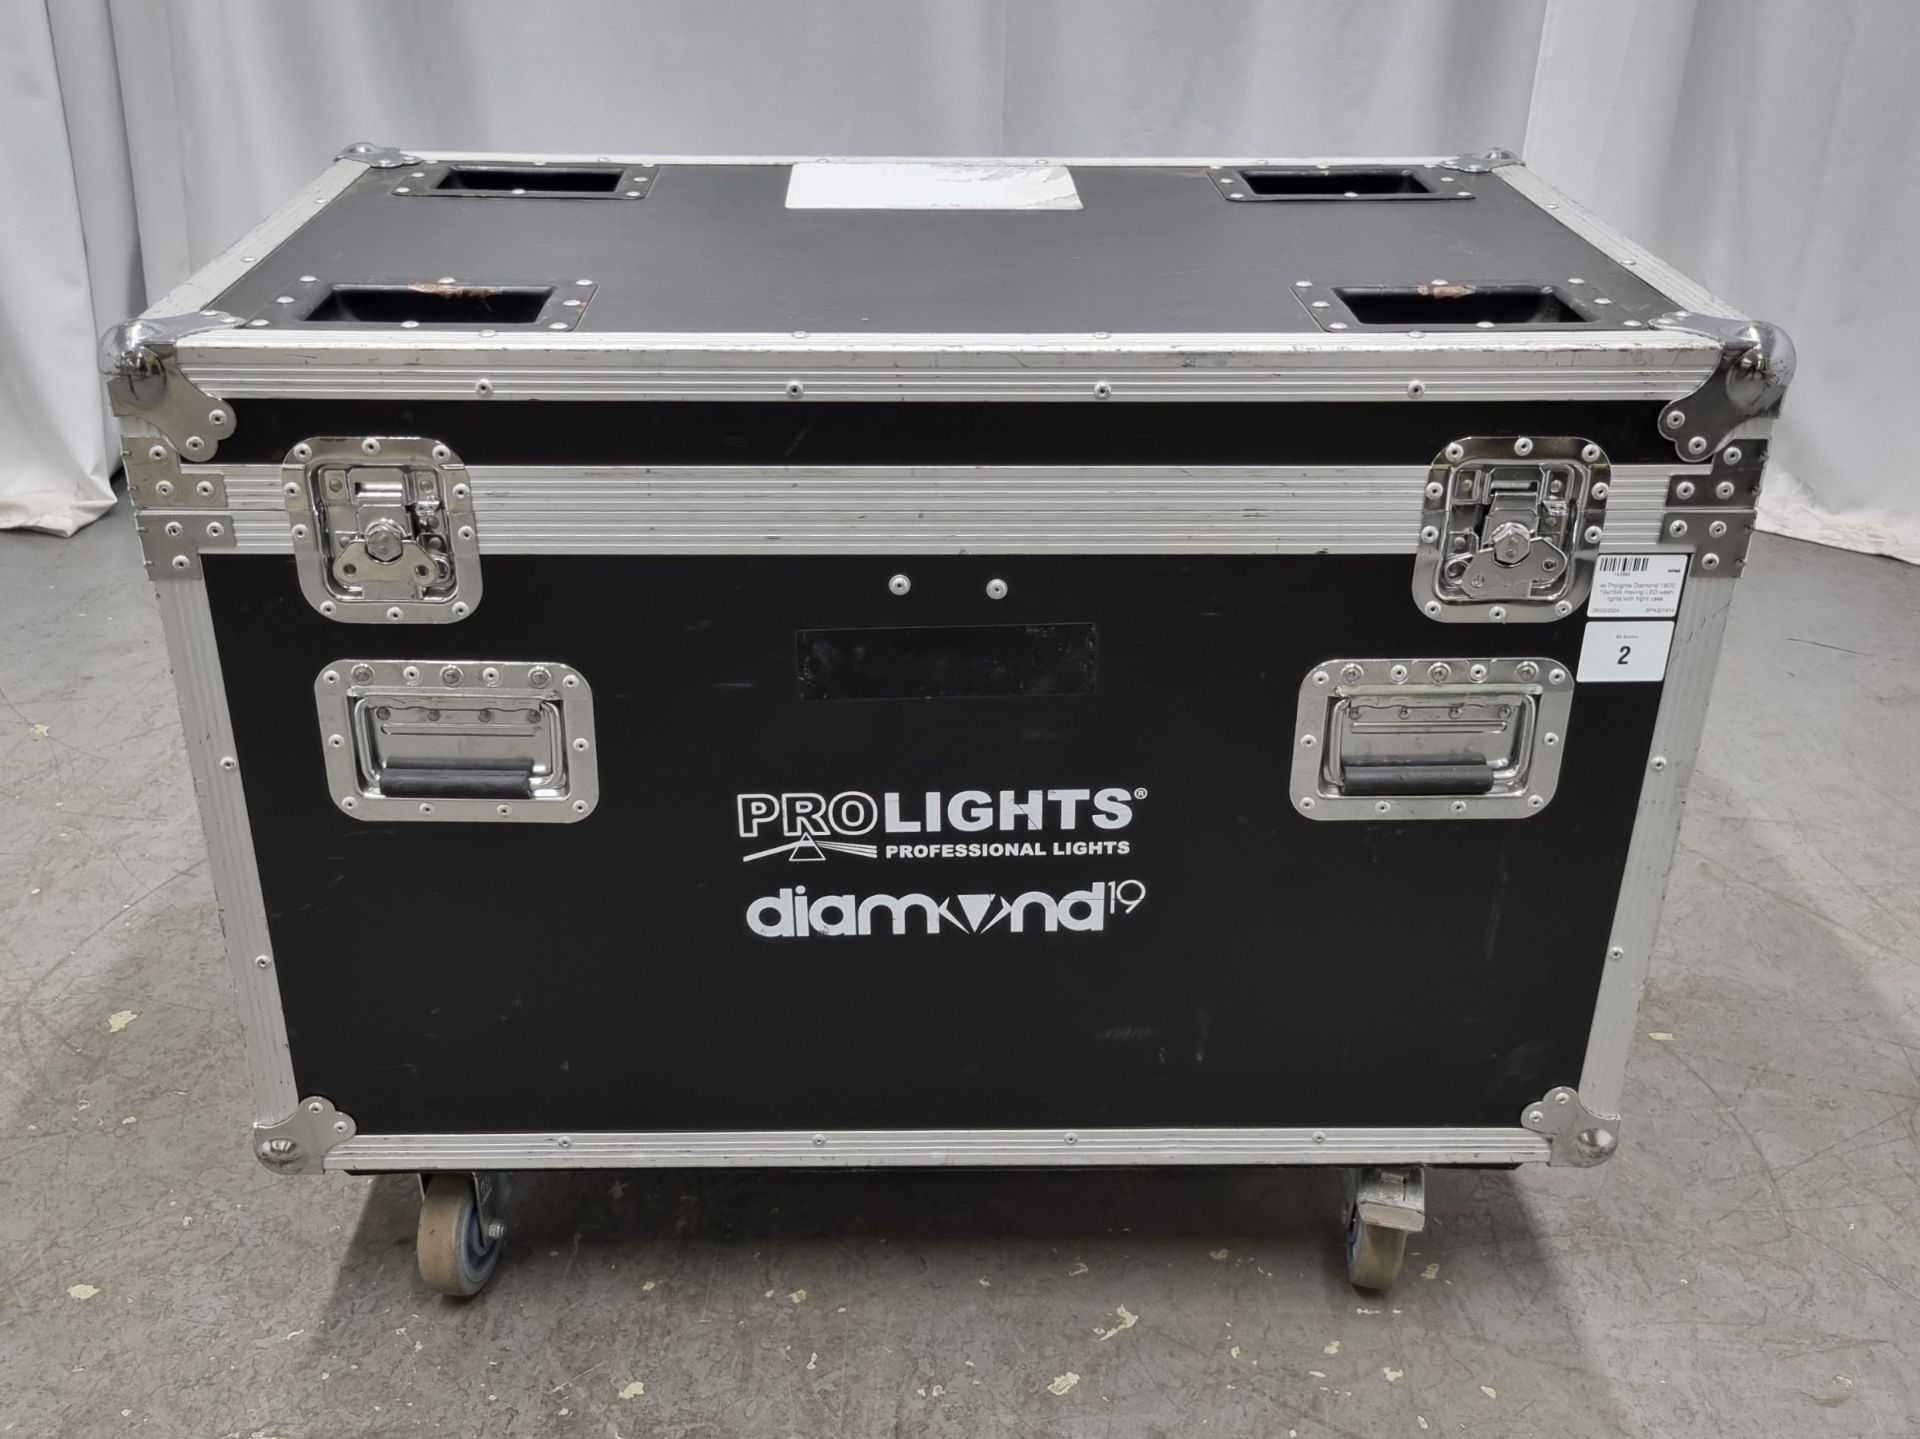 4x Prolights Diamond 19CC 19x15W moving LED wash lights with flight case - Image 10 of 12